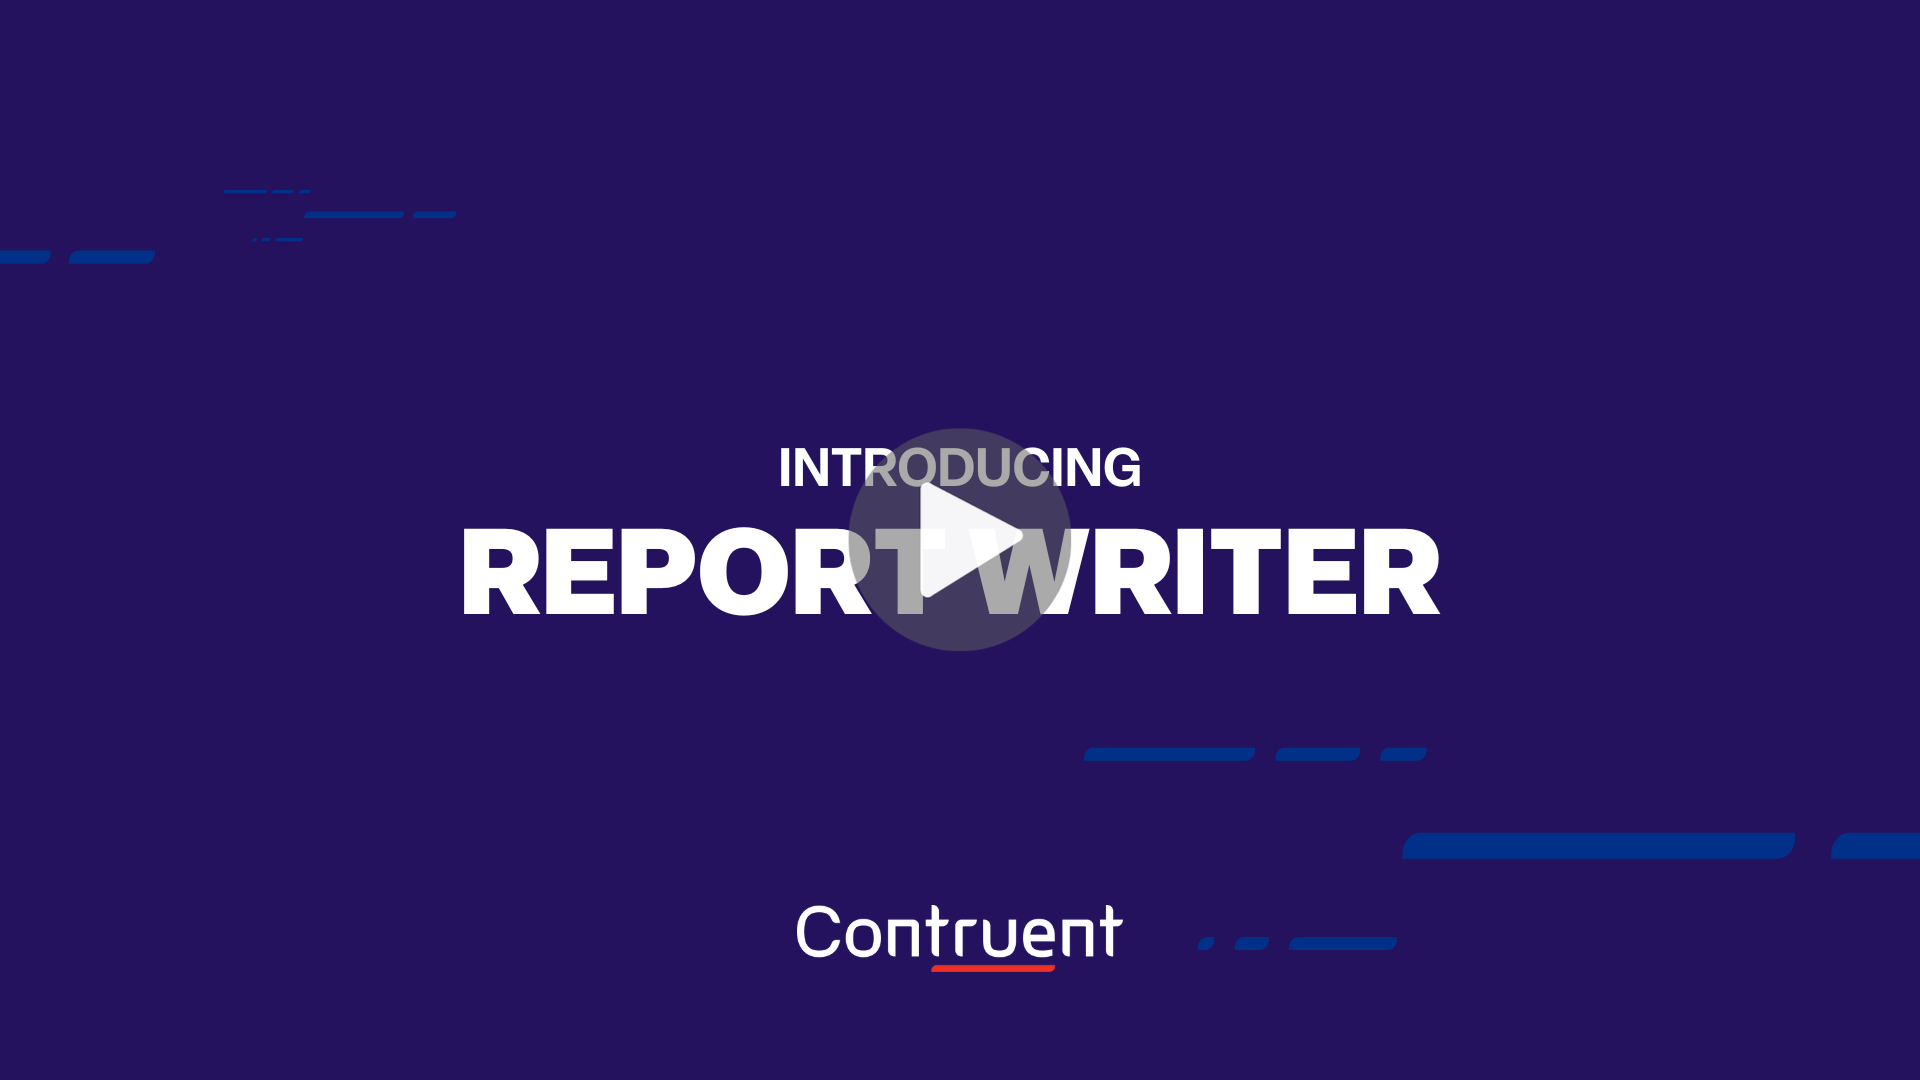 Report Writer